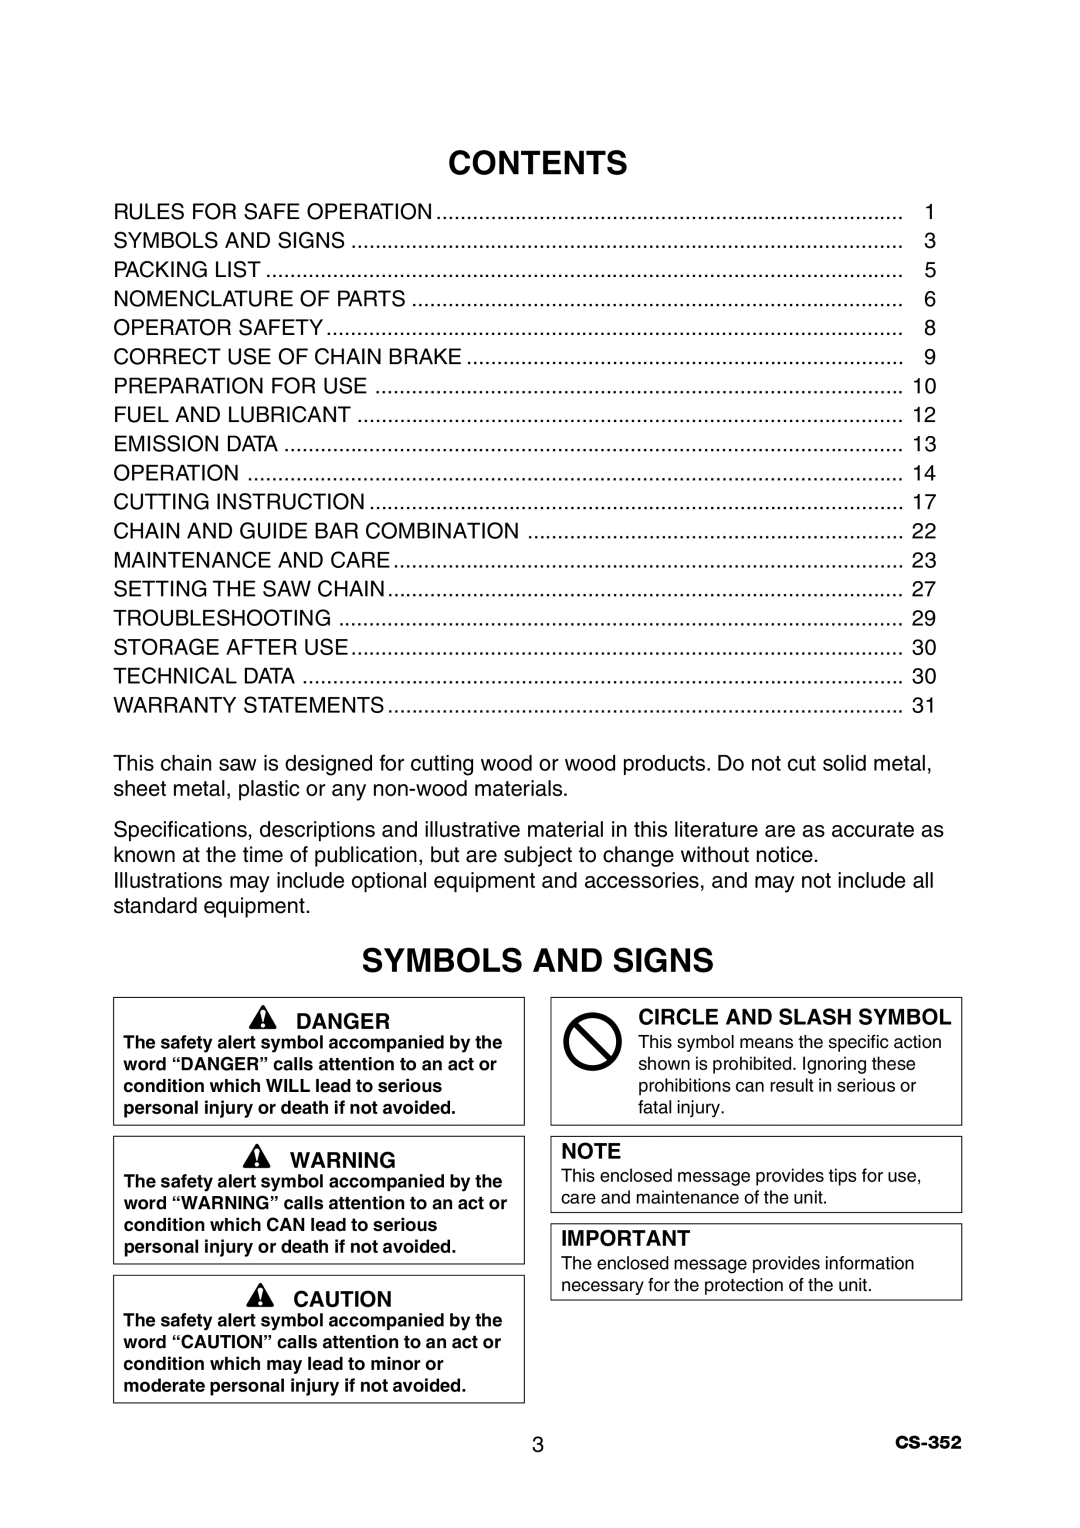 Echo CS-352 instruction manual Contents, Symbols And Signs, Danger, Circle And Slash Symbol 